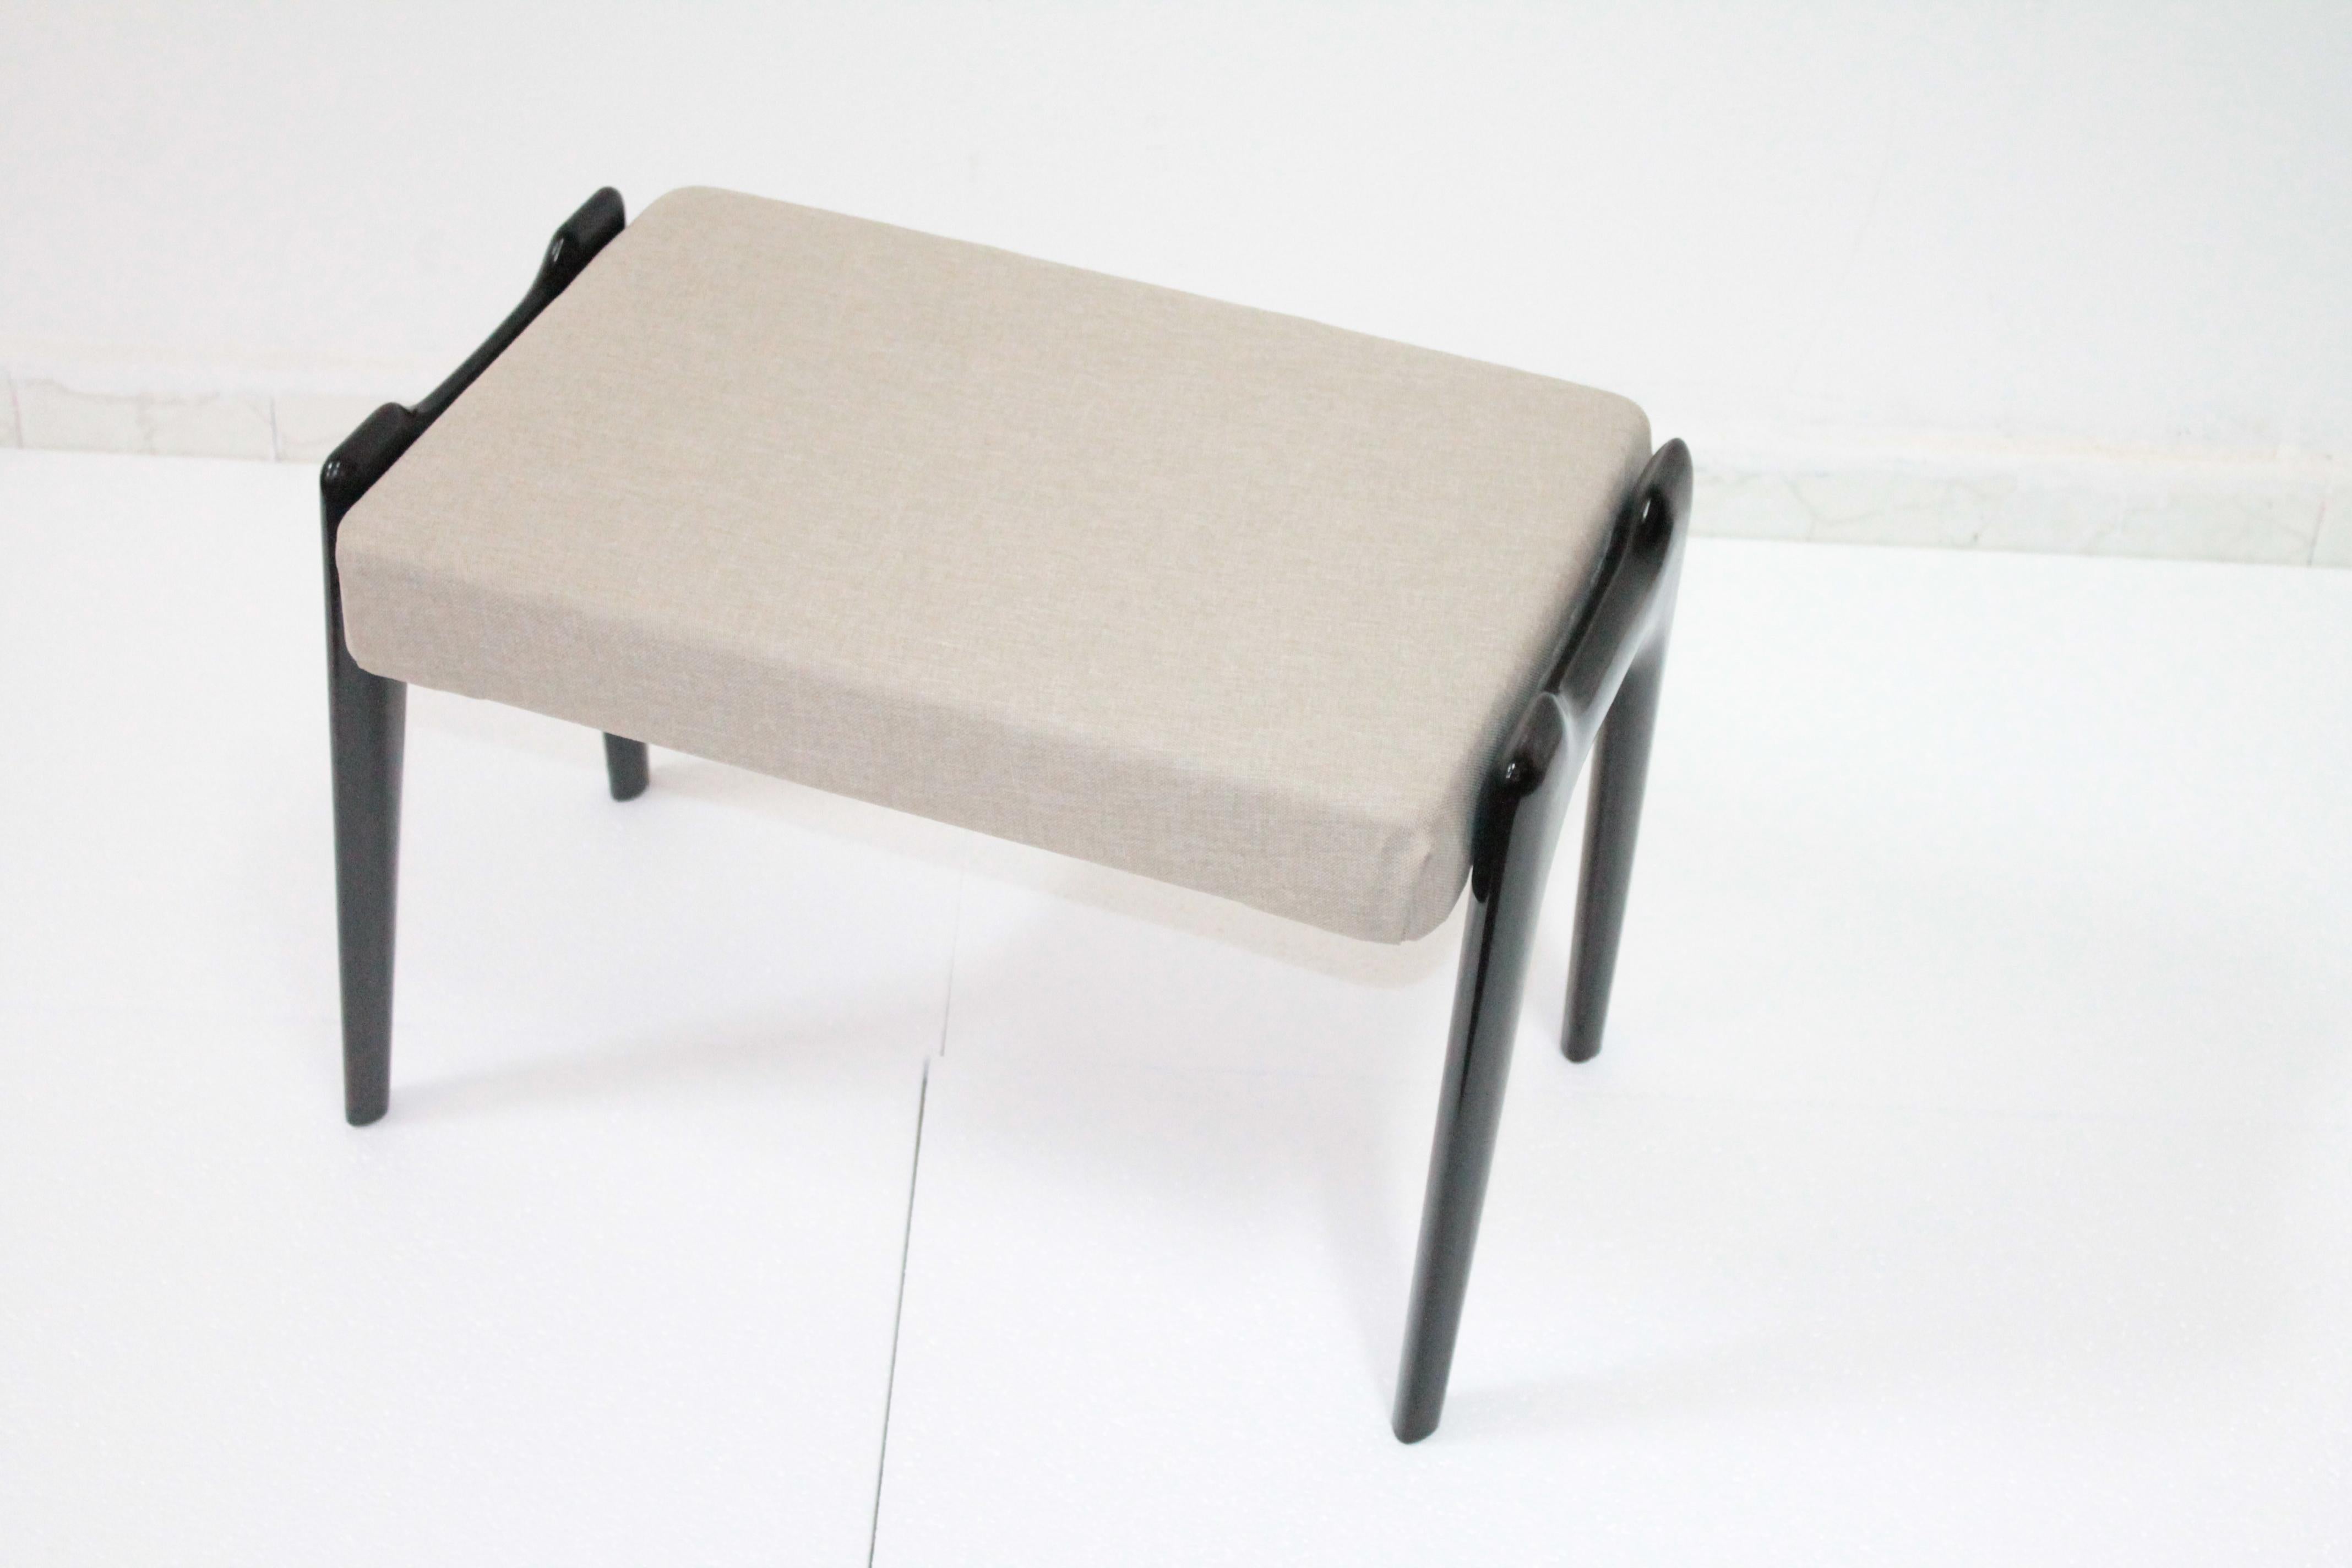 Small Italian stool design Ico Parisi circa 1950.
Good condition.
Dimensions: H 38 W 36 x 55 cm.